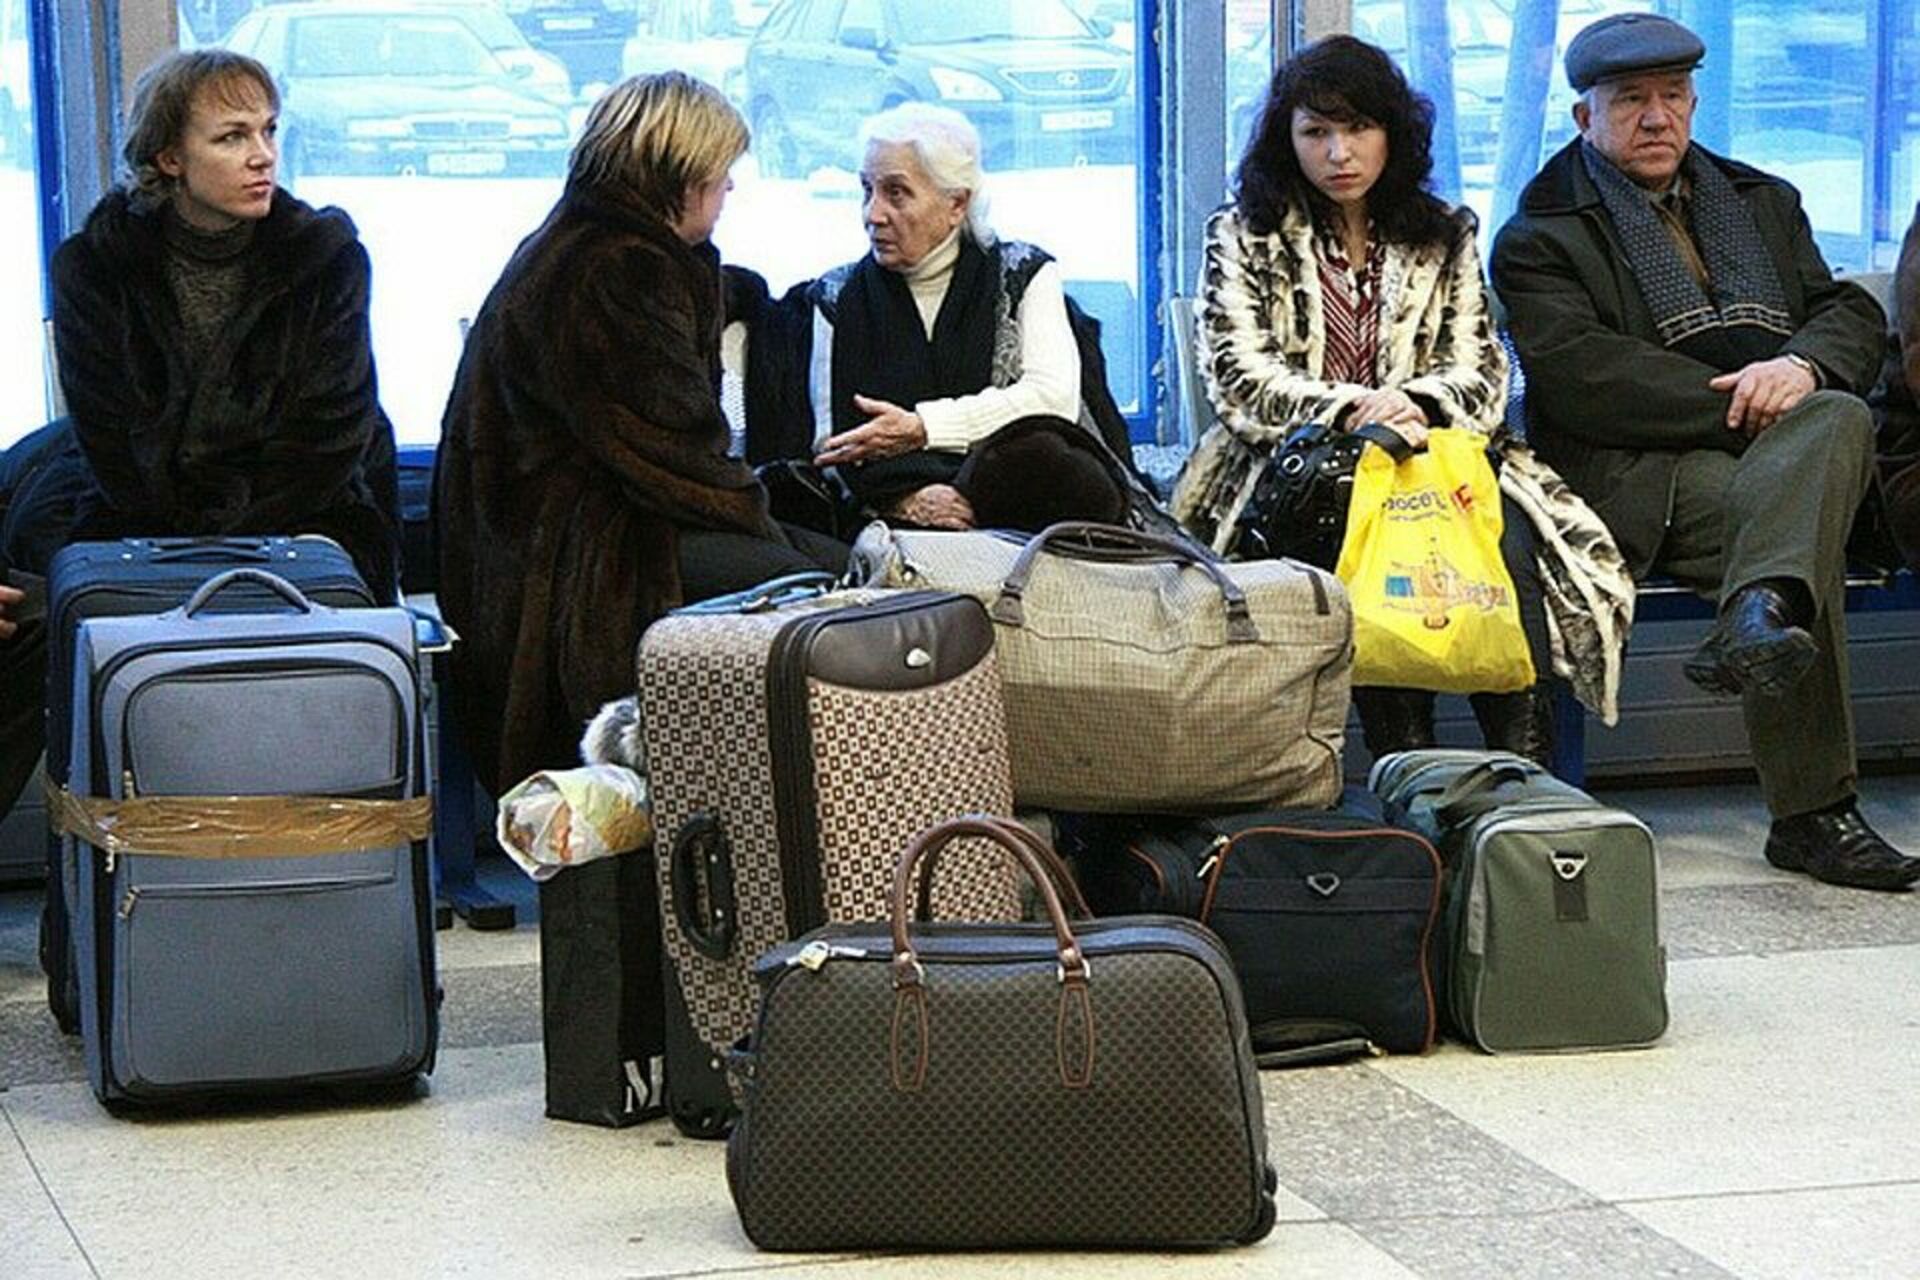 Как живут эмигранты. Эмиграция чемоданы. Уехавшие россияне. Эмигранты из России. Беженцы с чемоданами.